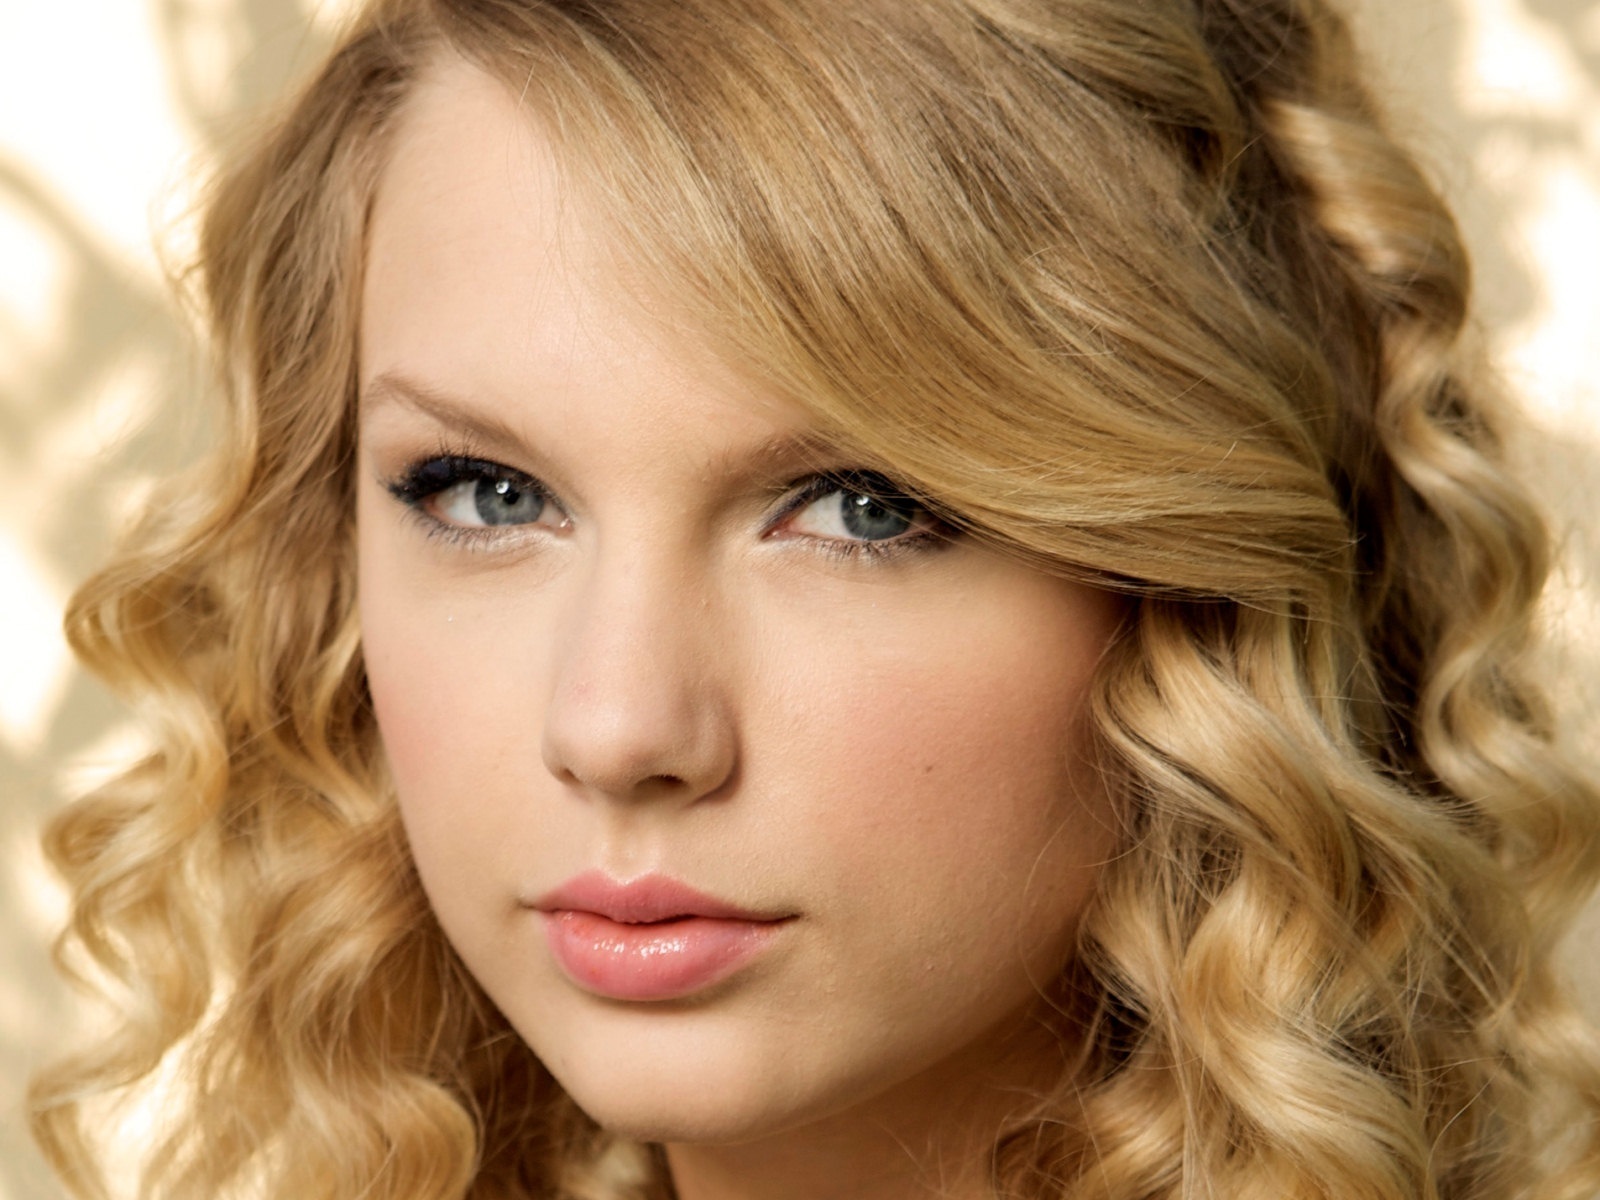 Top 10 Most Popular Female Singers in 2014